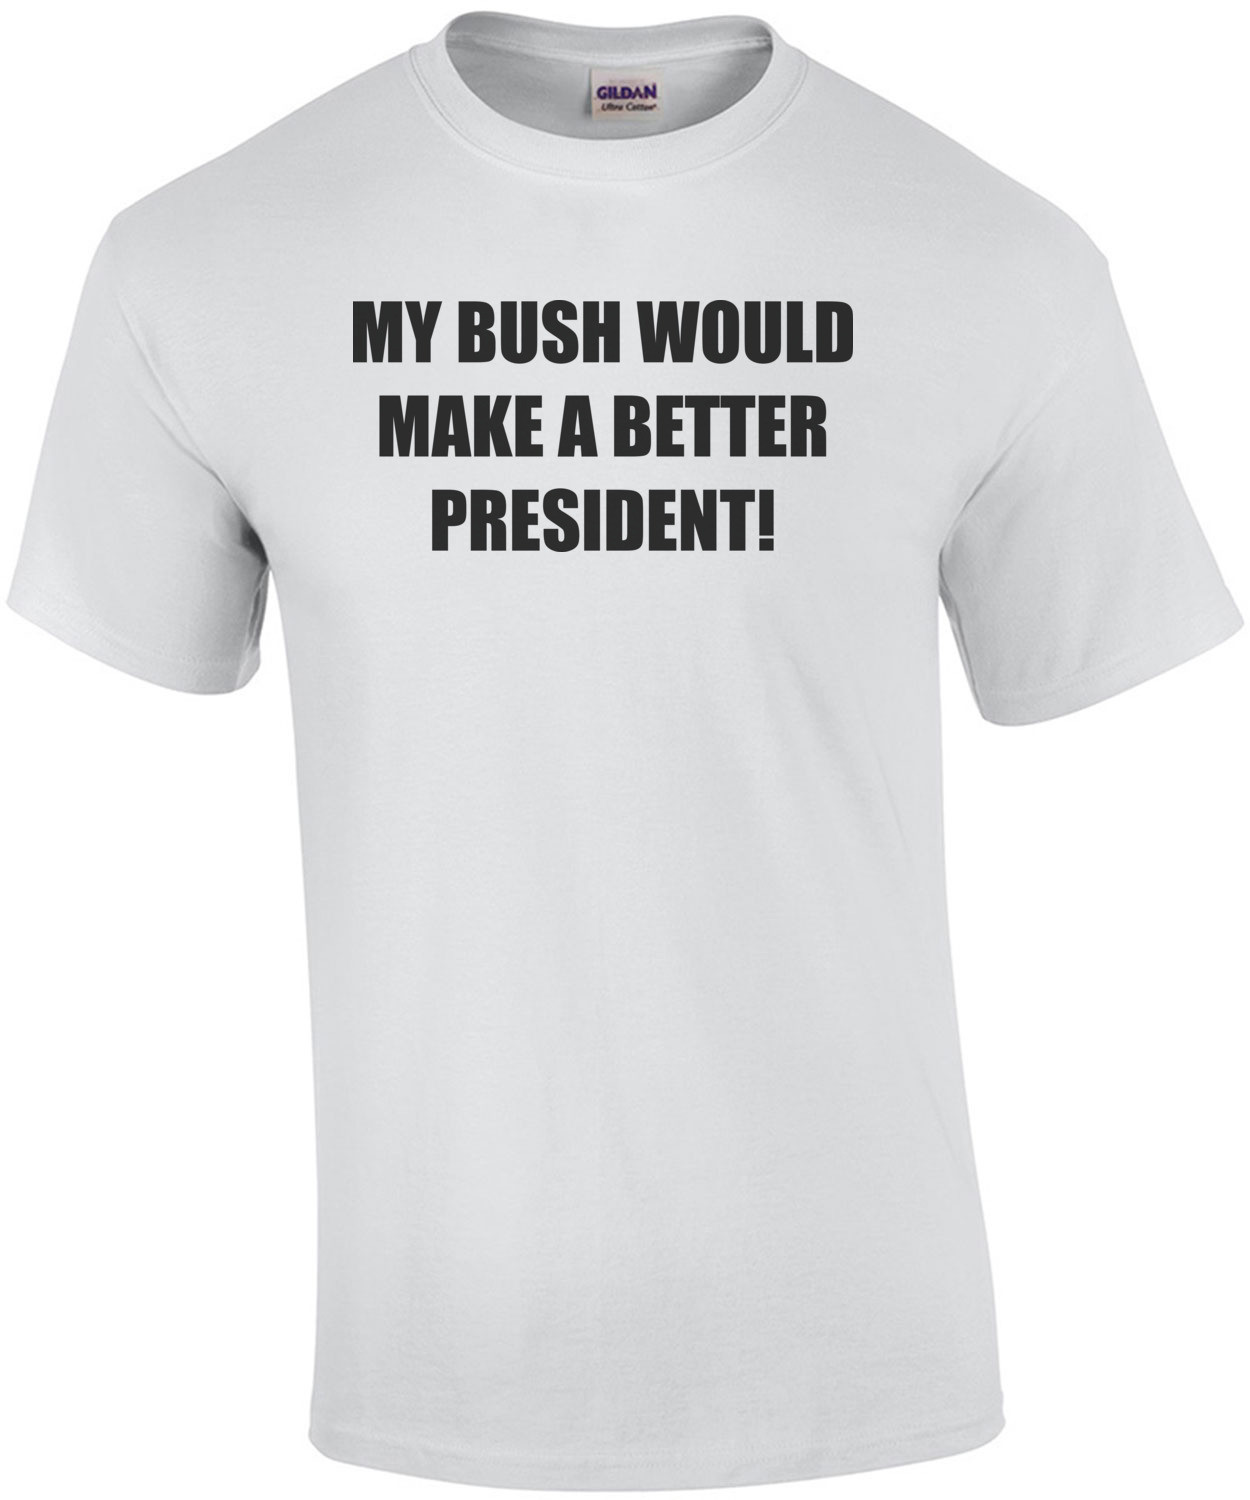 MY BUSH WOULD MAKE A BETTER PRESIDENT! Shirt